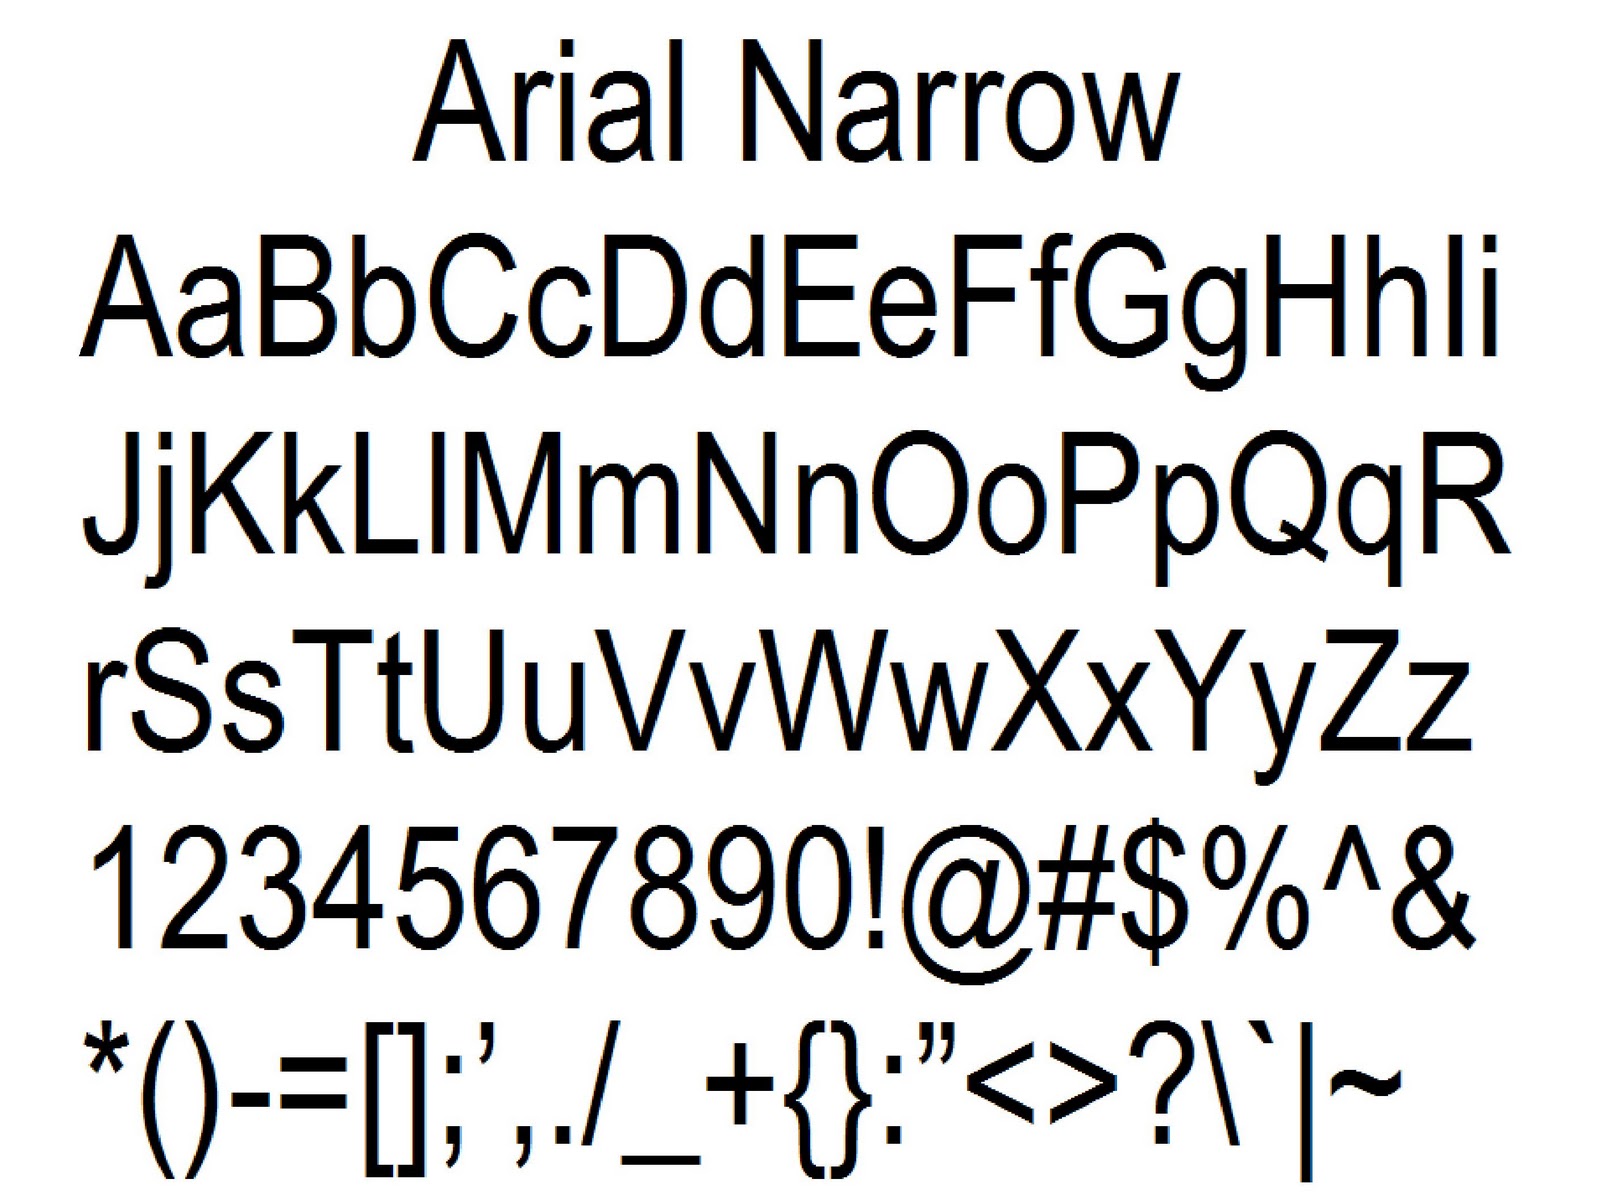 download arial narrow font windows 10